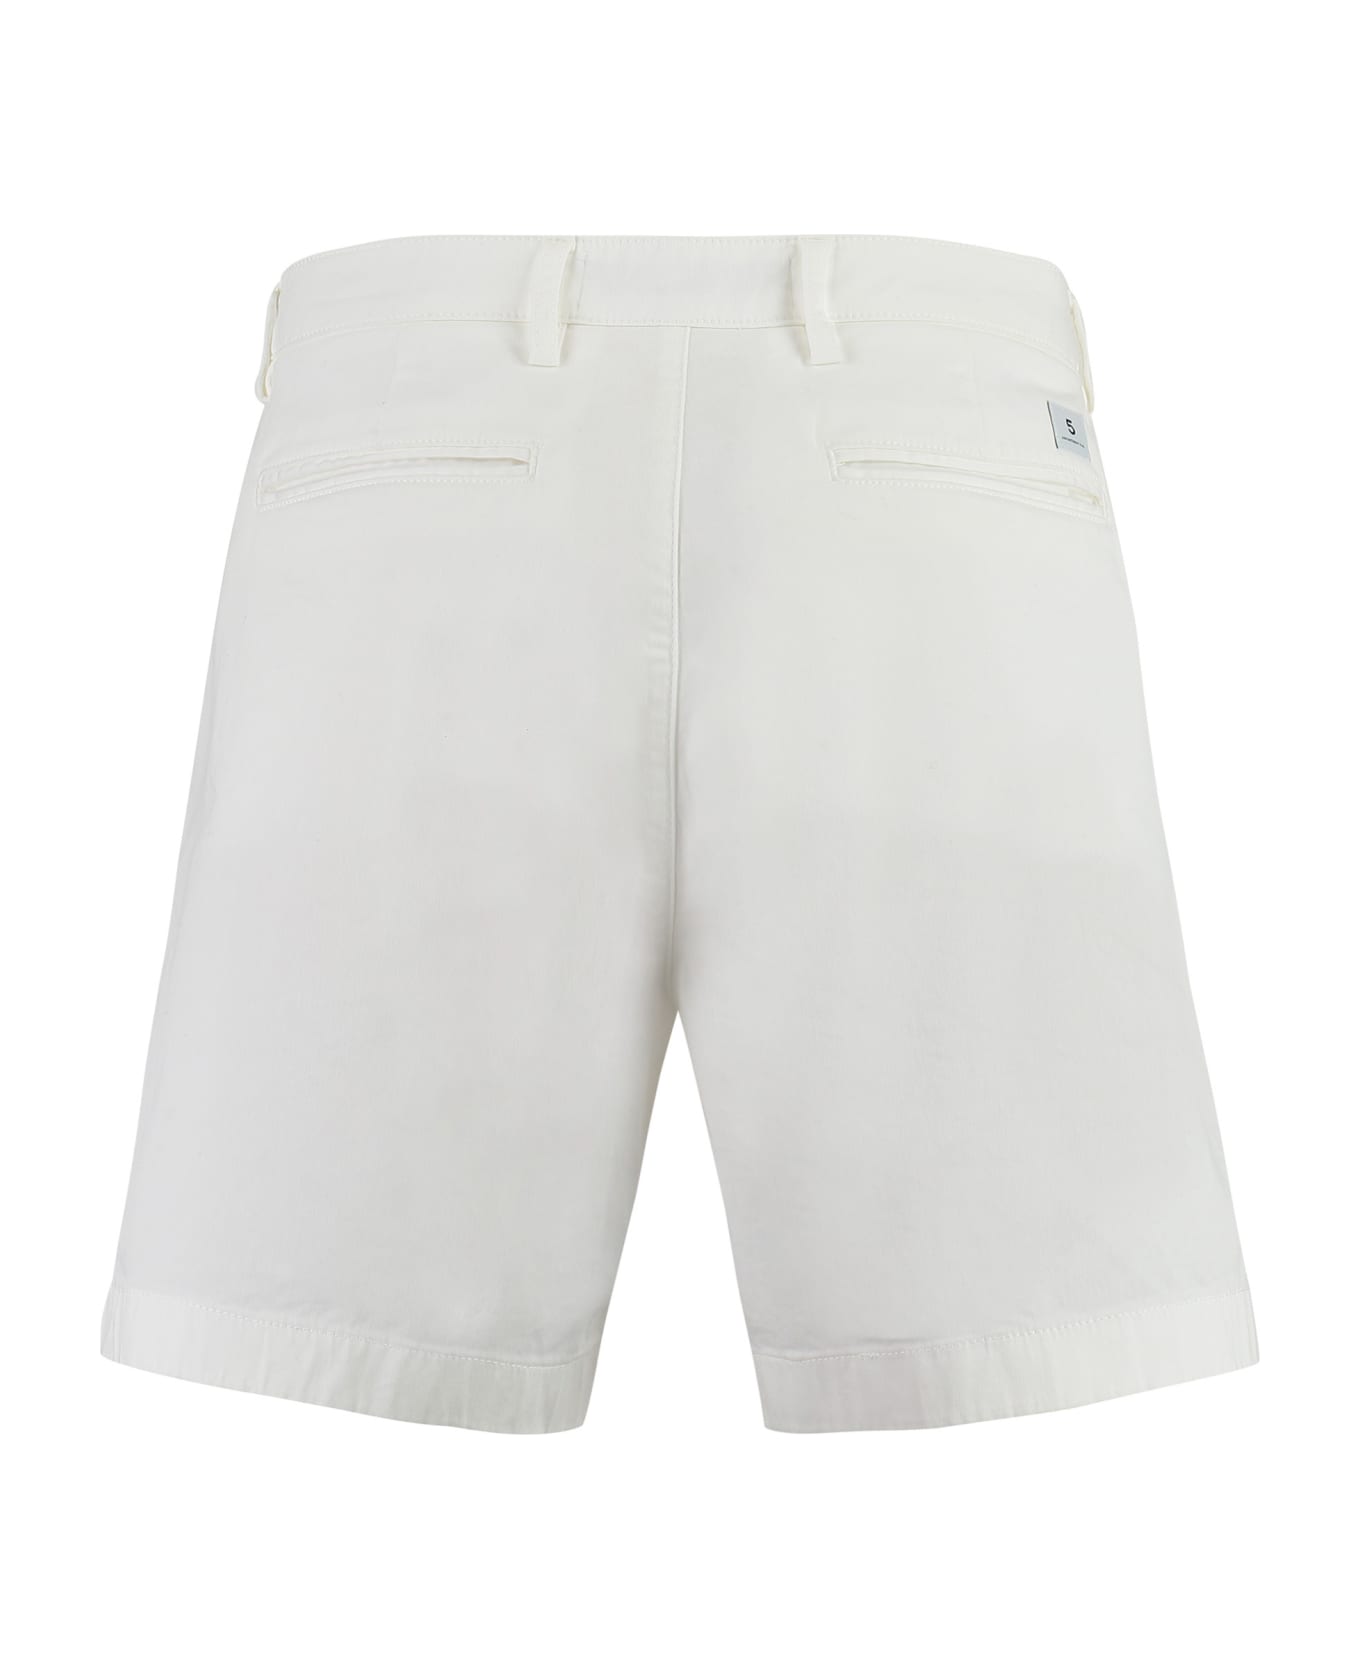 Department Five Cotton Bermuda Shorts - White